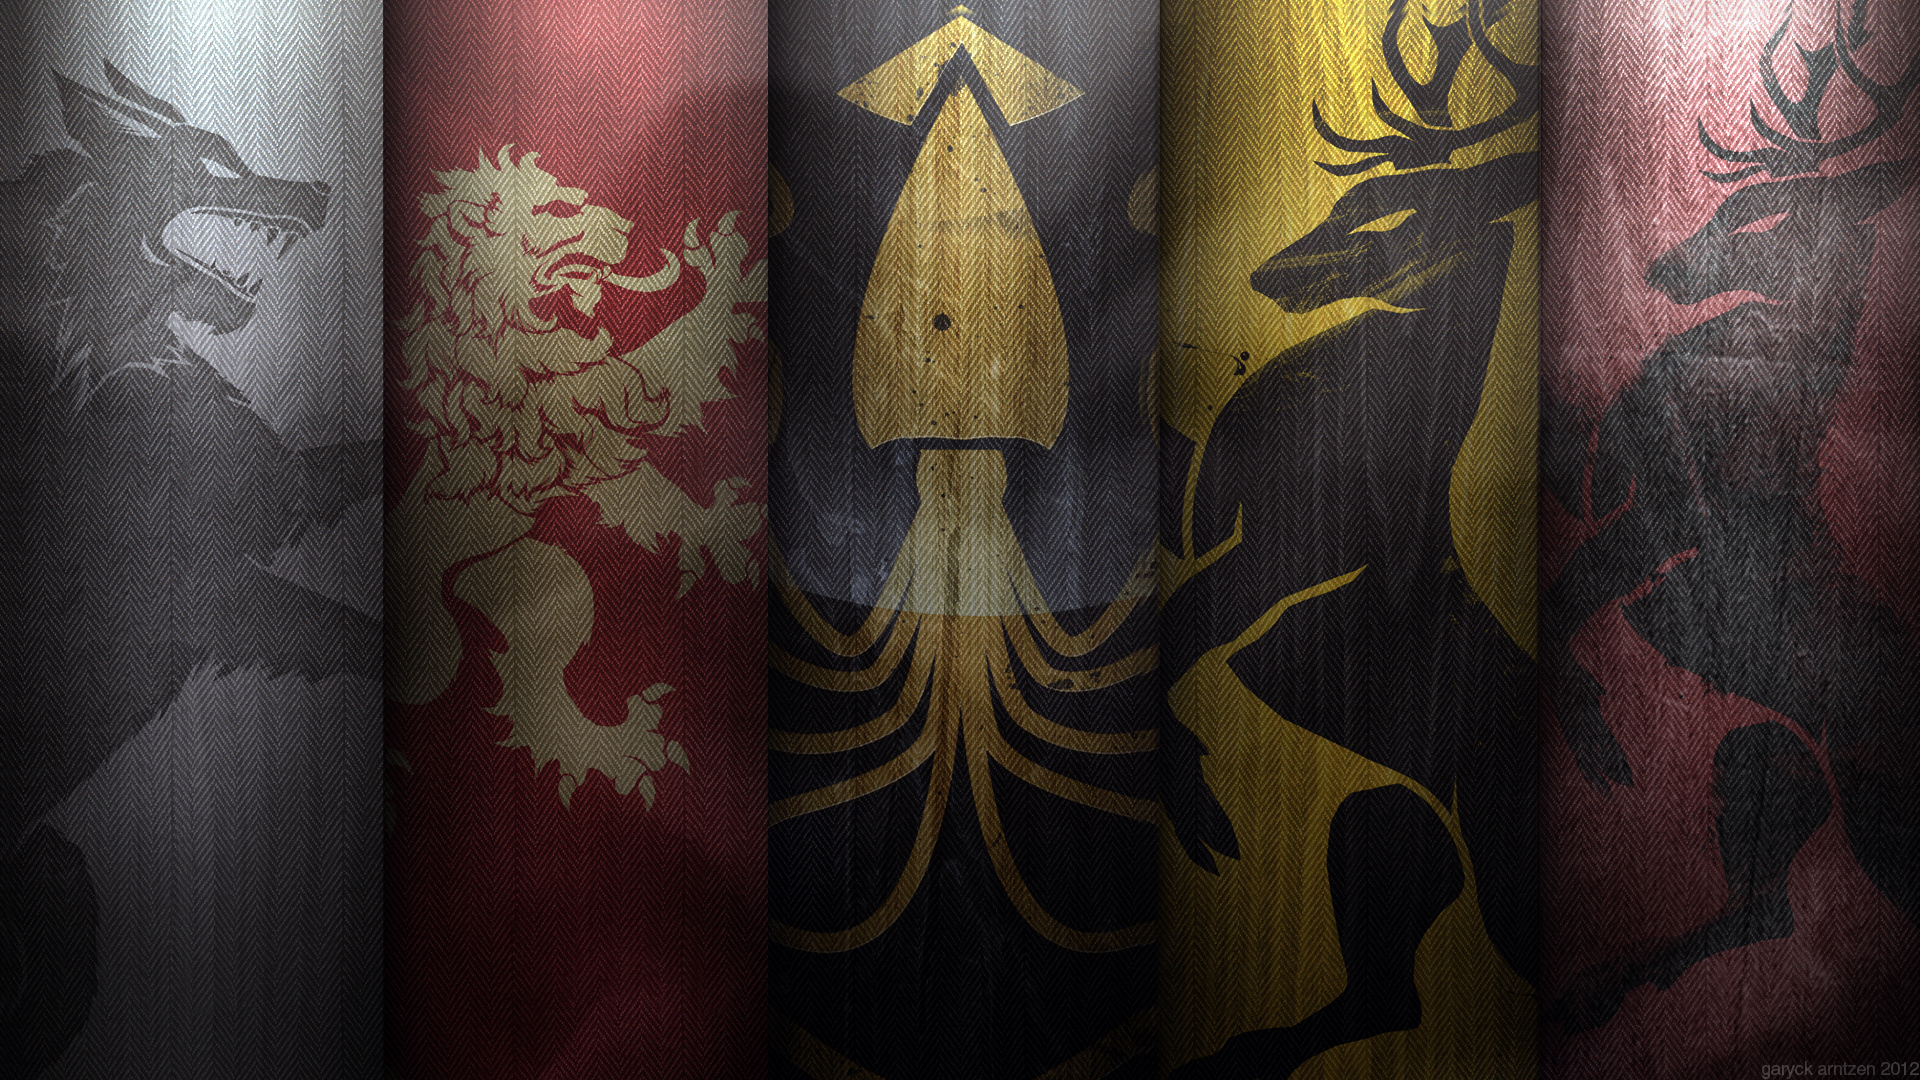 Download Game of Thrones Wallpapers HD   Celtas Today